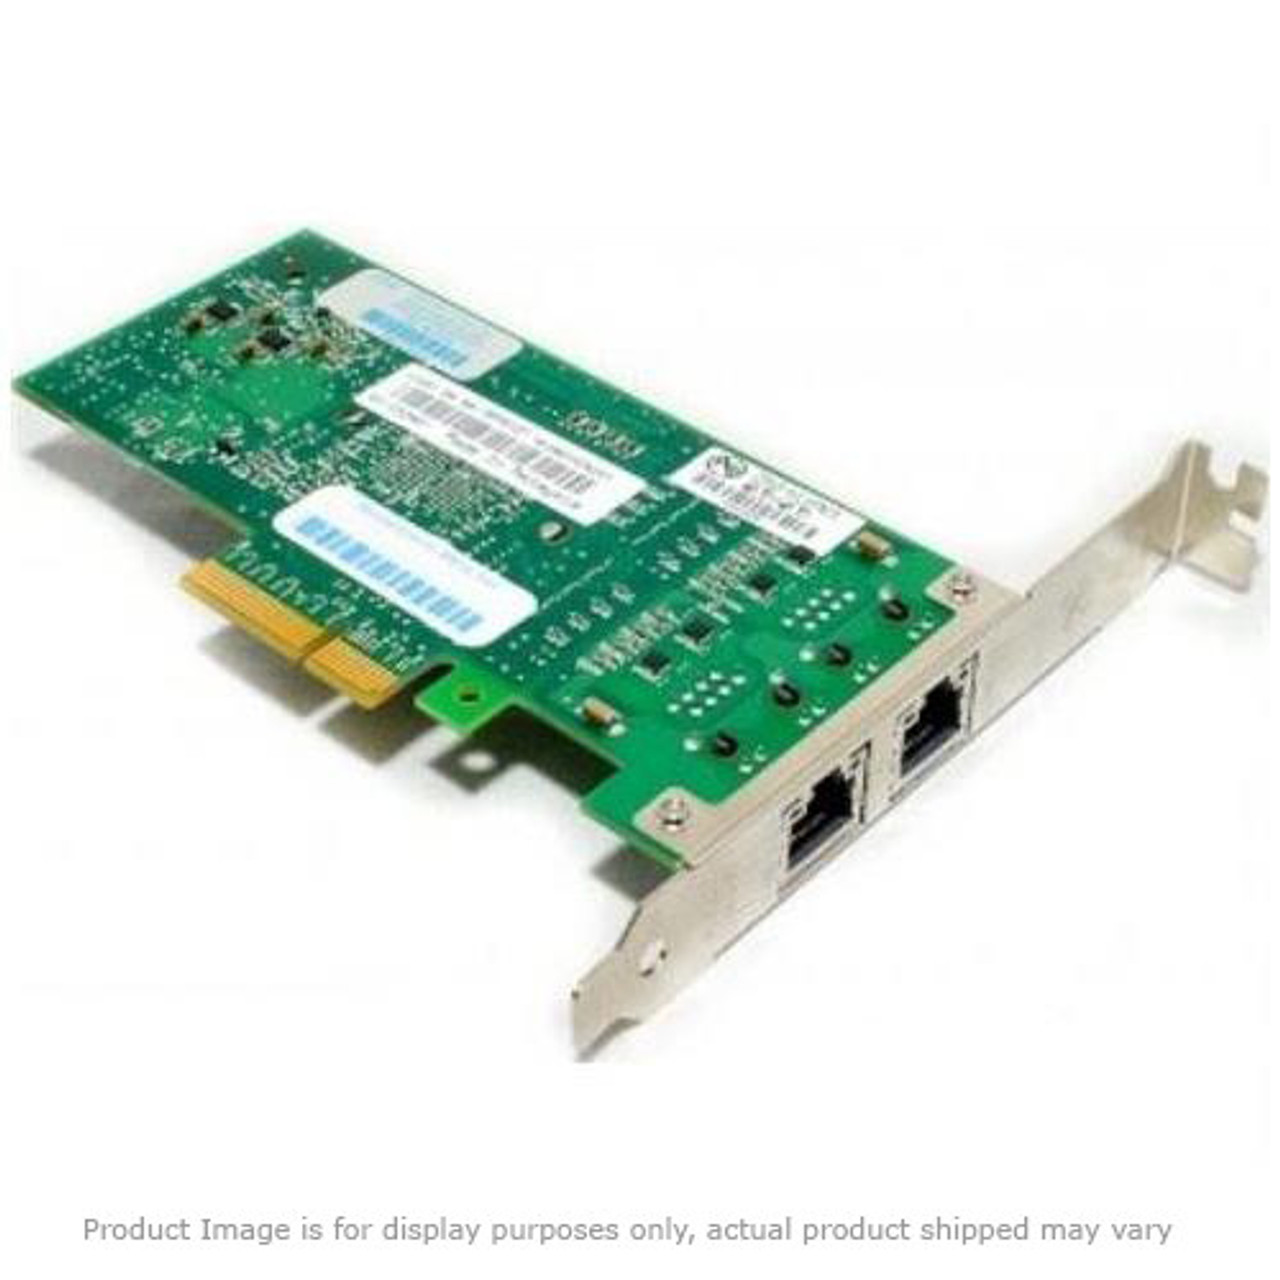 PILA8400 Intel EtherExpress PRO/10 Single-Port RJ-45 10Mbps 10Base-2/10Base-T Ethernet BNC PCI Network Adapter